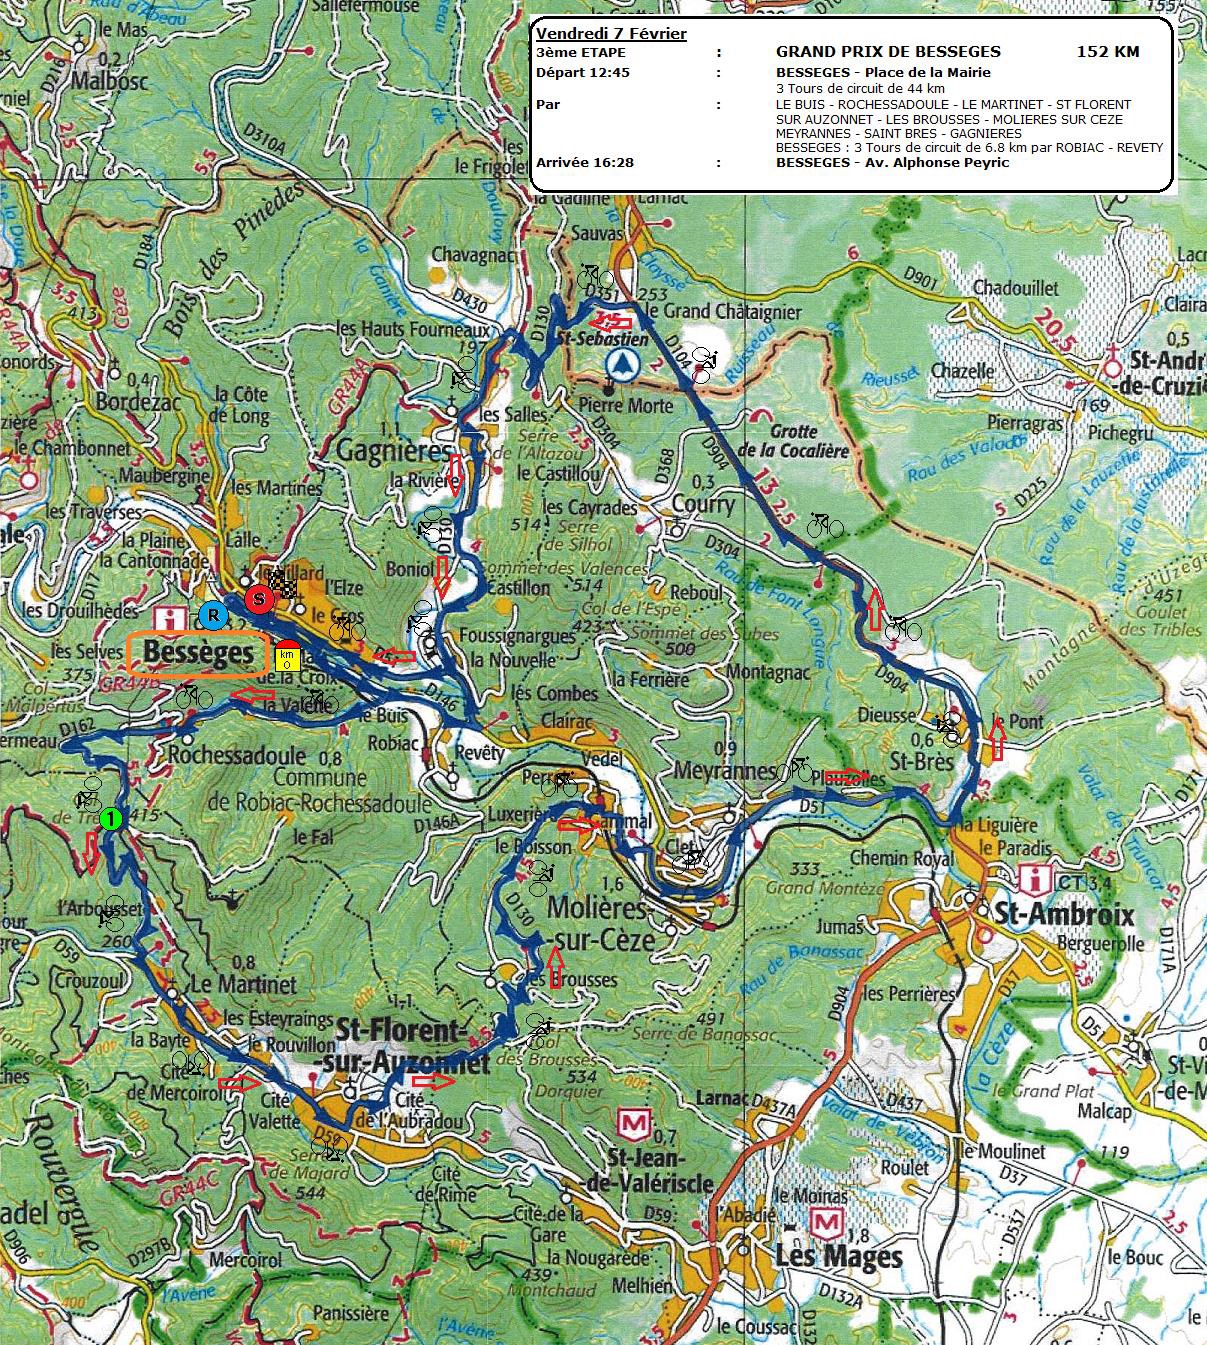 Streckenverlauf Etoile de Bessges 2014 - Etappe 3